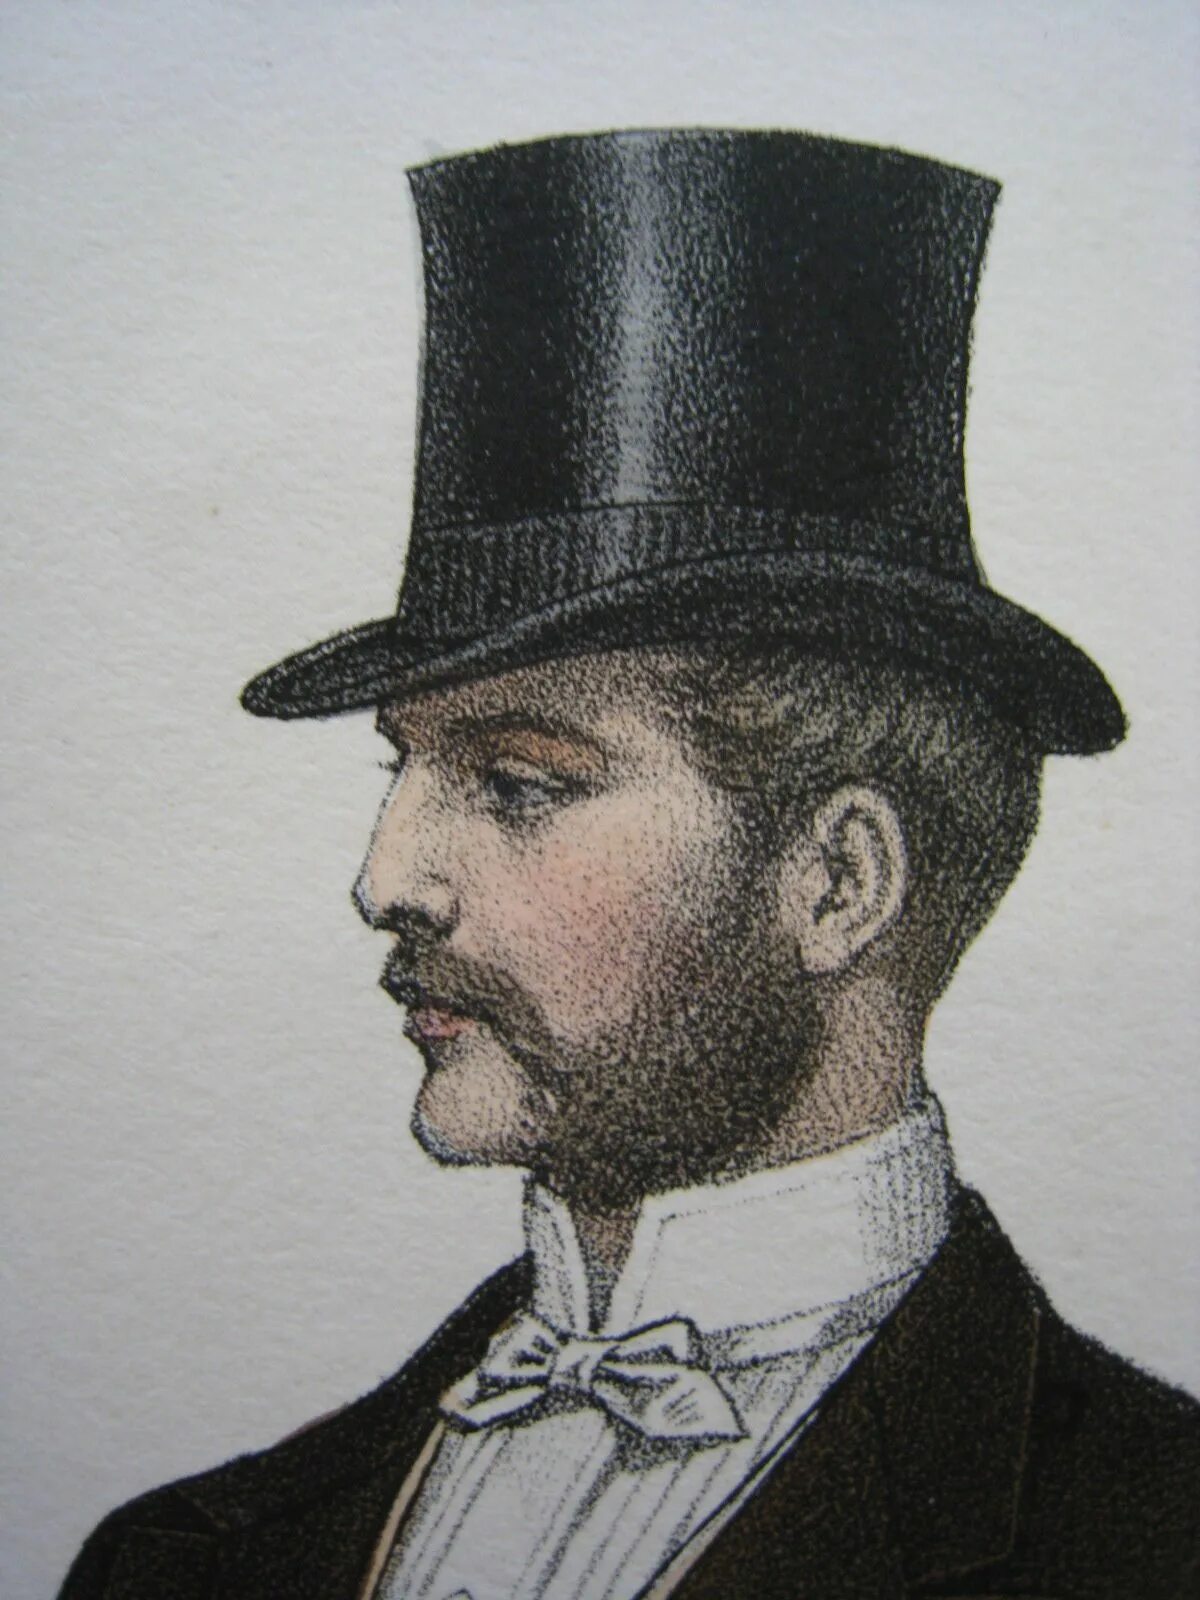 Джентльмен 19. Шляпа Боливар 19 век. Боливар головной убор 19 век. Джон Хетерингтон. Шляпы 19 века мужские.